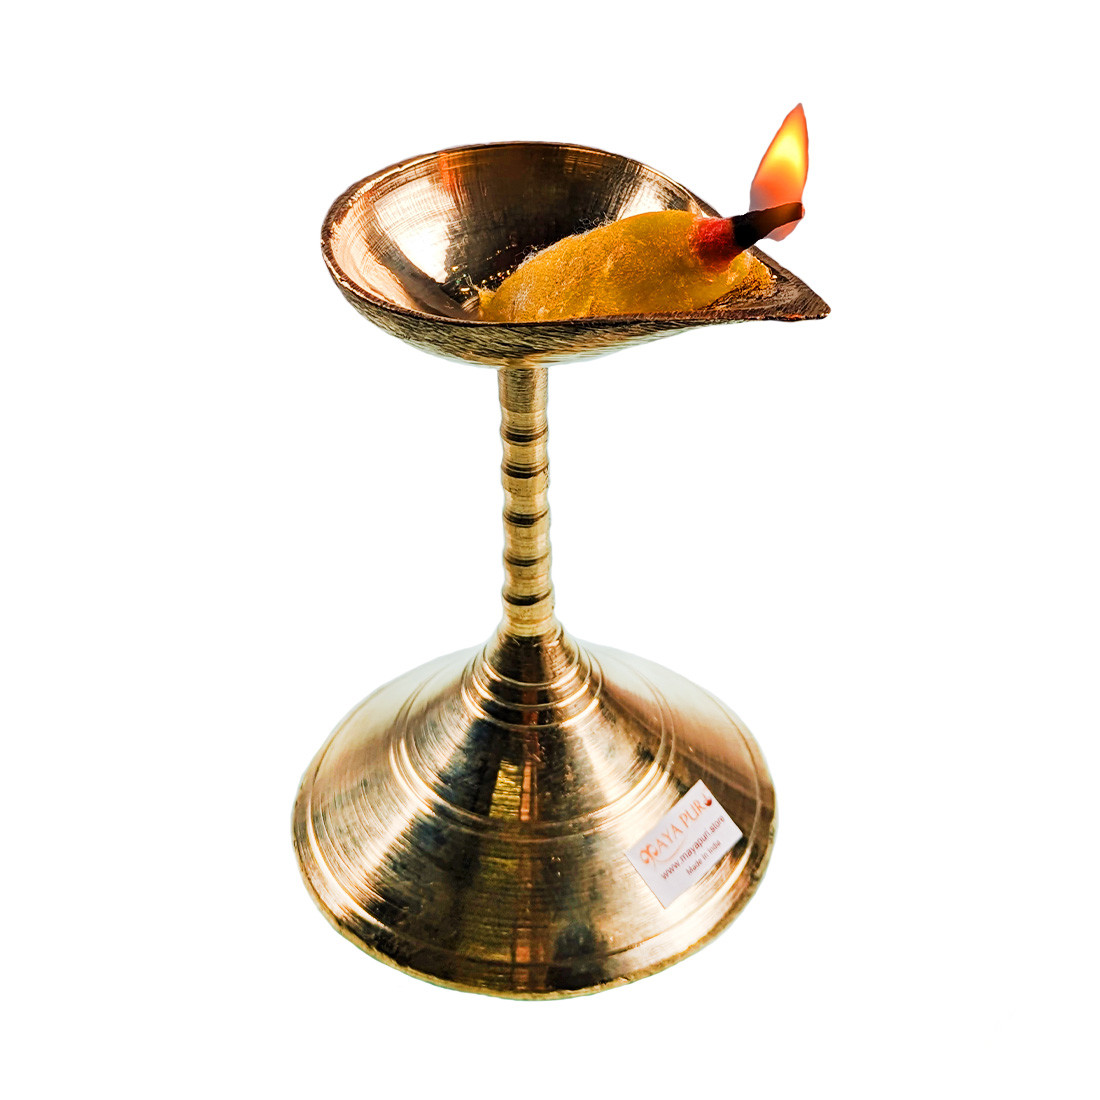 MAYAPURI Small Size Traditional Brass Stand Diya,Pradip for Puja or Pooja Oil Lamp (Golden)